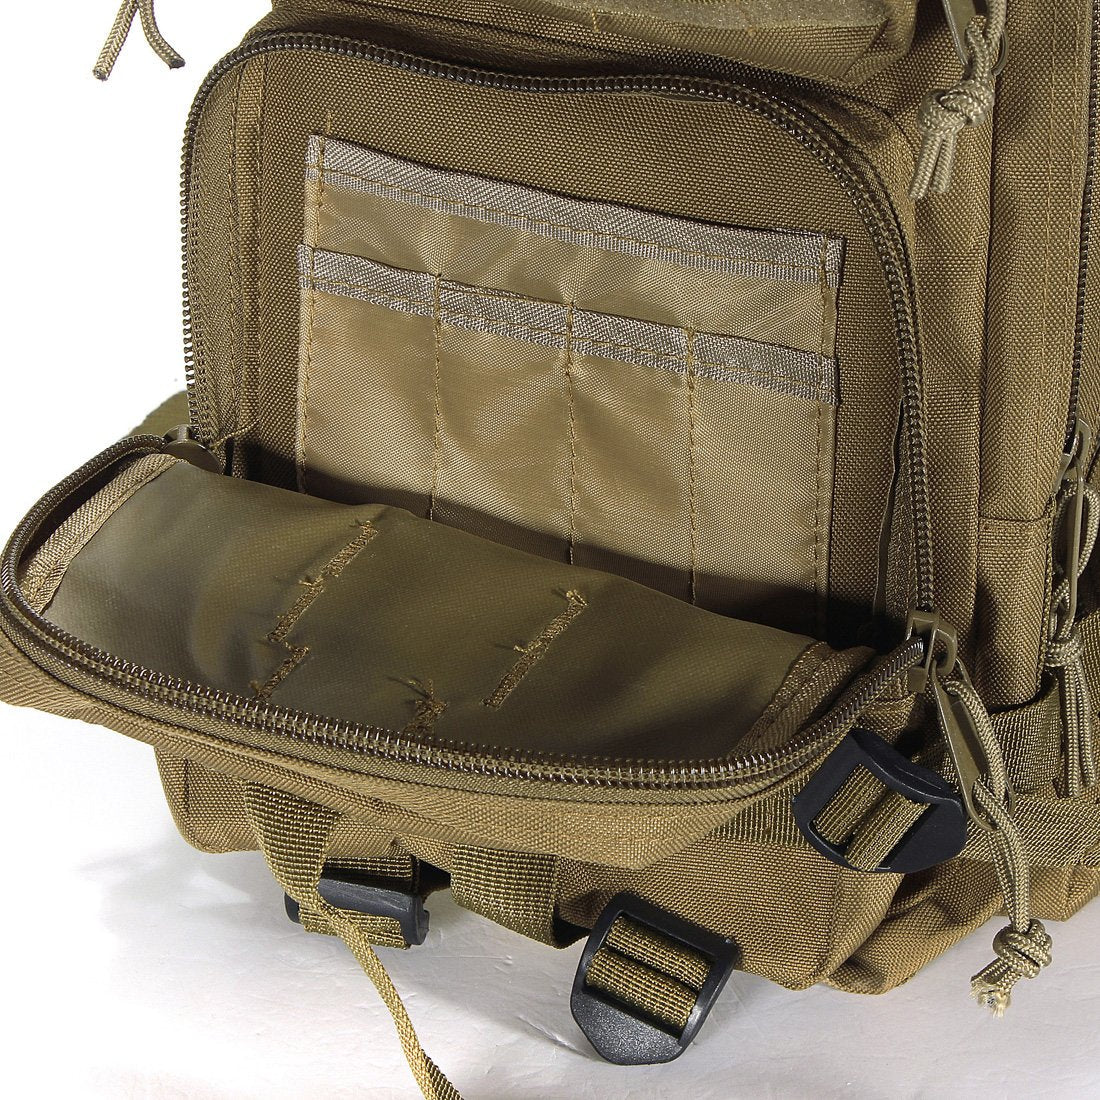 Outdoor Military Rucksacks Tactical Backpack